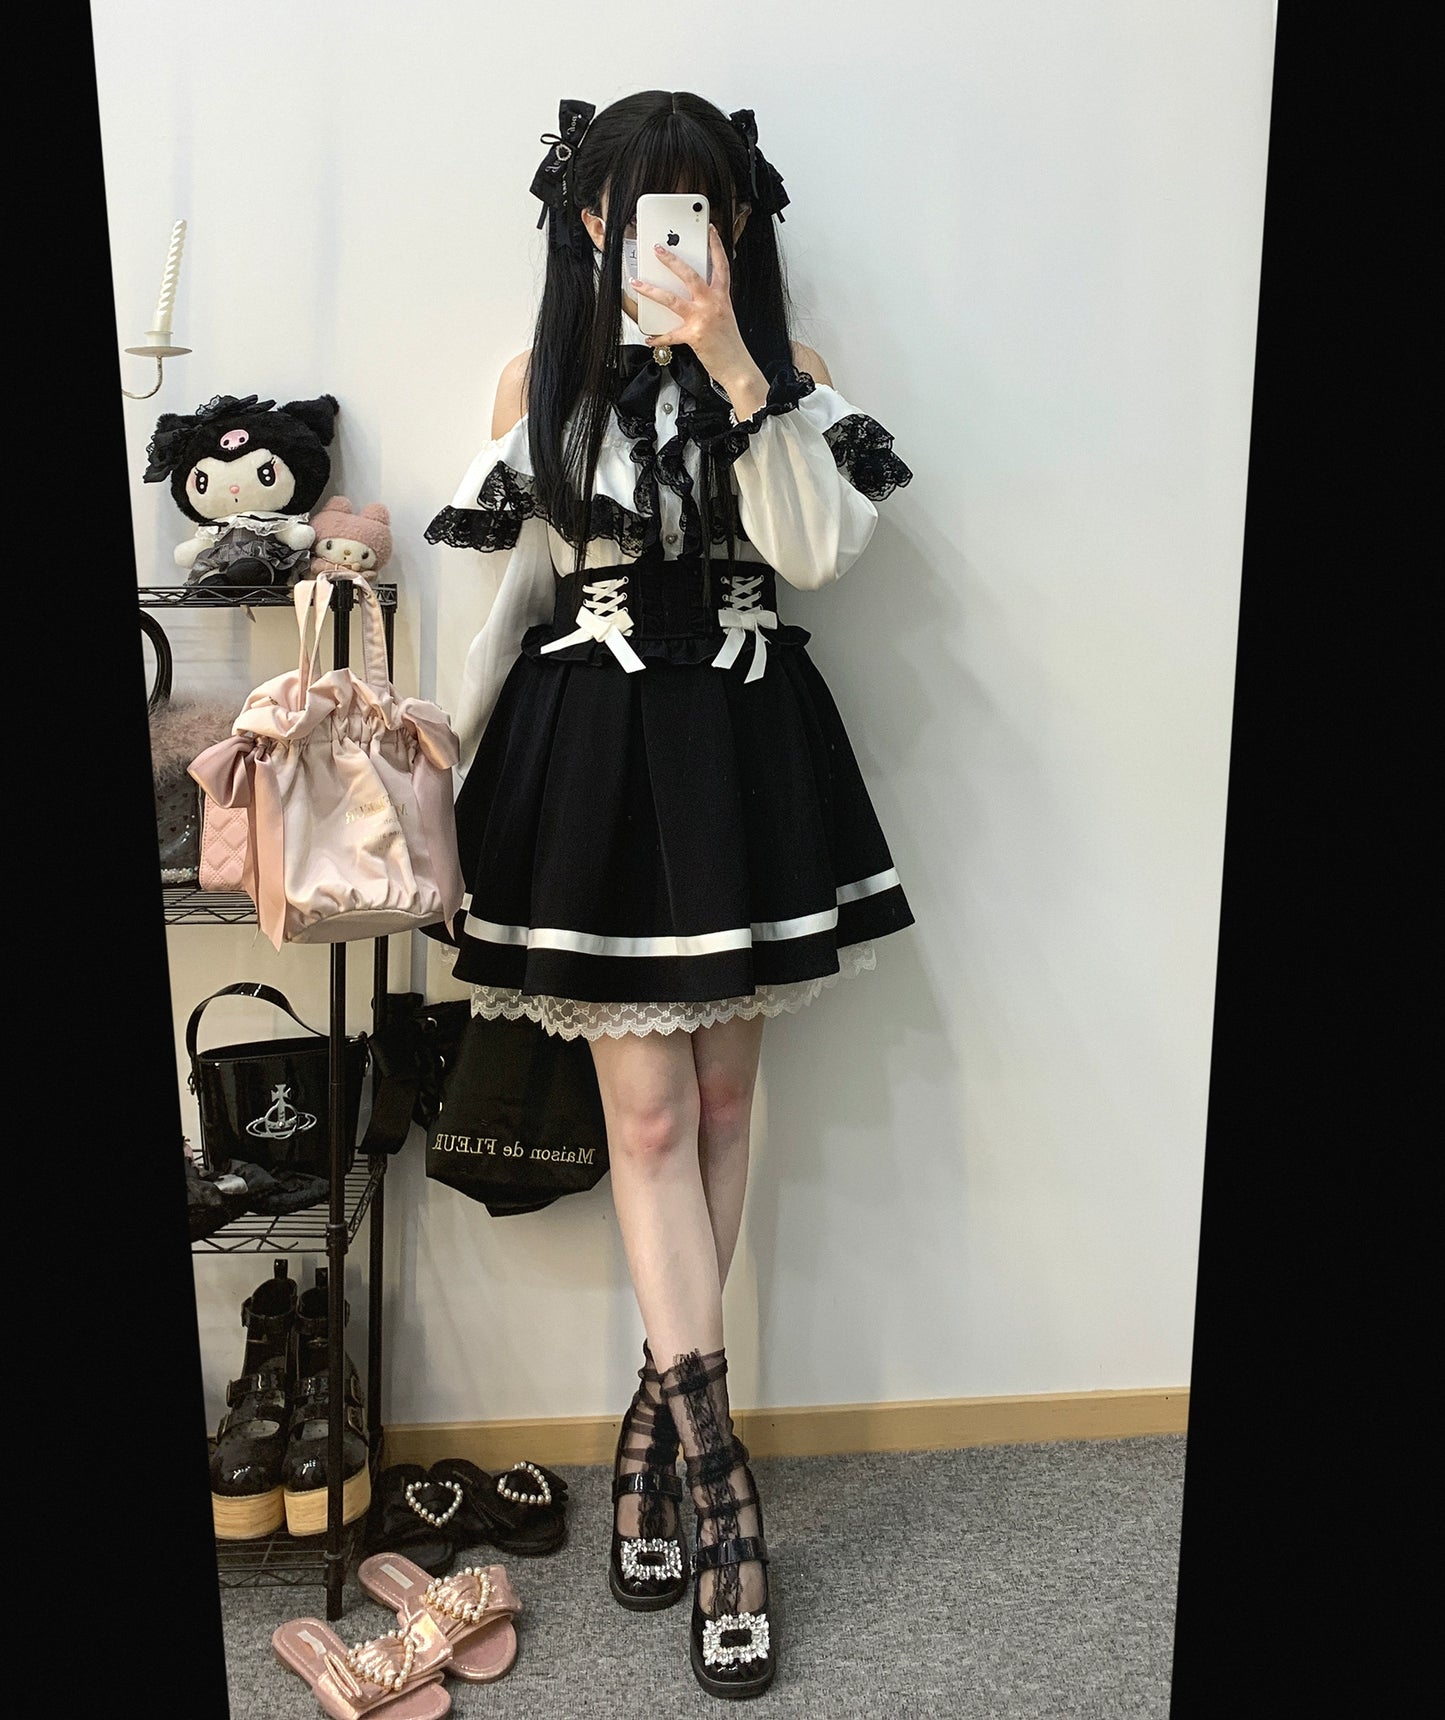 Jirai Kei Skirt High Waist Lace Up Skirt With Bow Tie 31860:396684